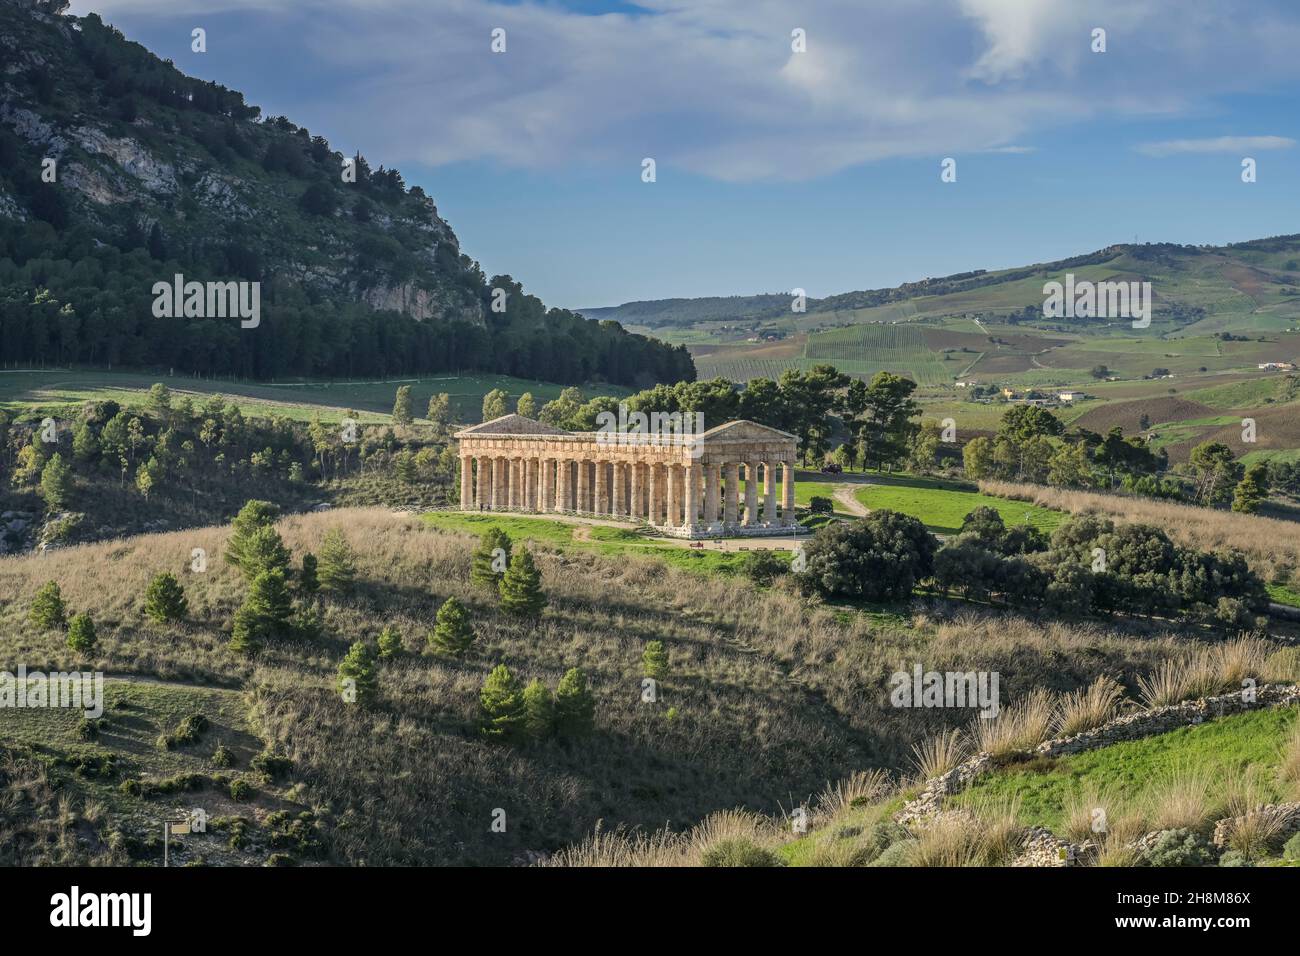 Tempel der Hera, Segesta, Sizilien, Italien Stock Photo